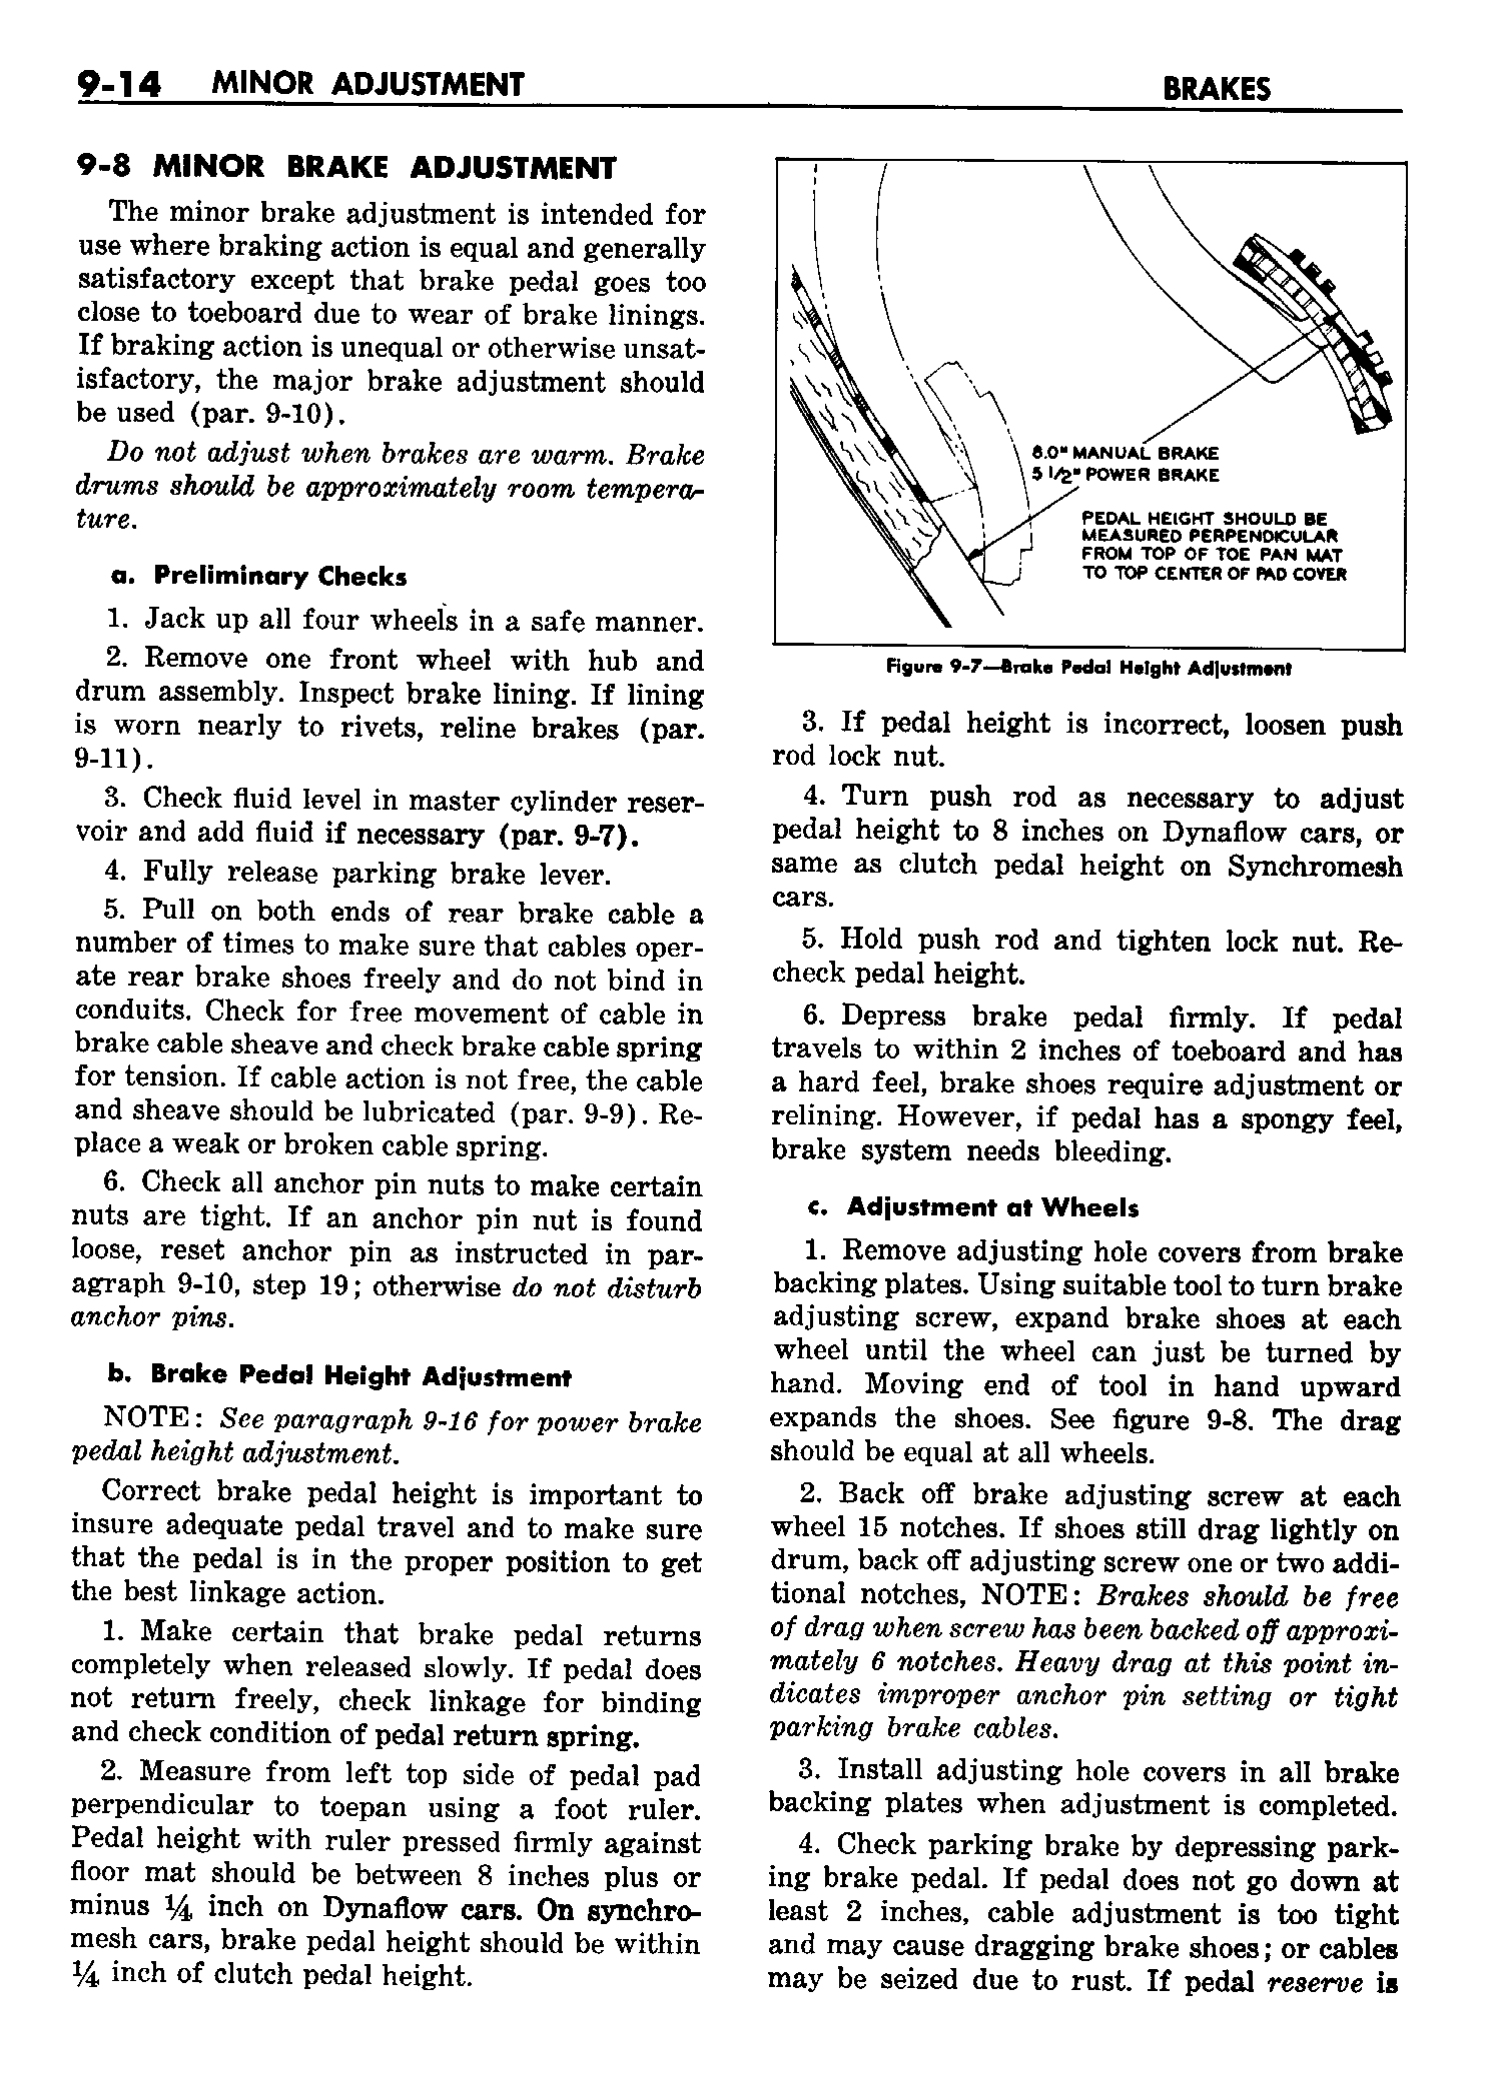 n_10 1958 Buick Shop Manual - Brakes_14.jpg